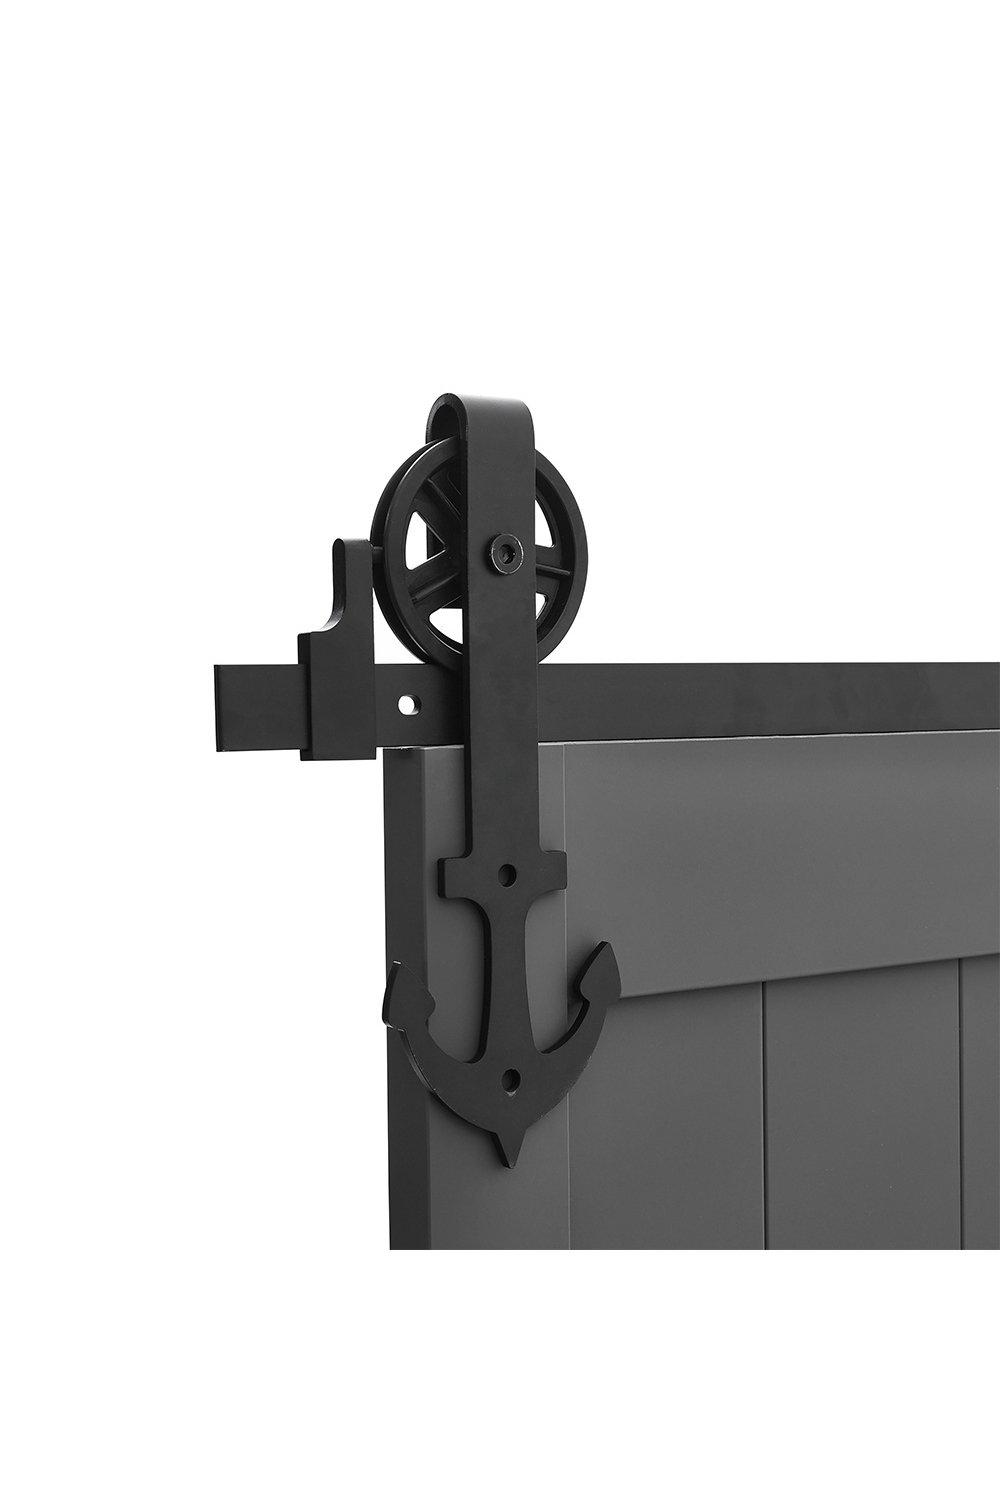 Rustic Anchor Shaped Barn Door Hardware Kit 6.6ft